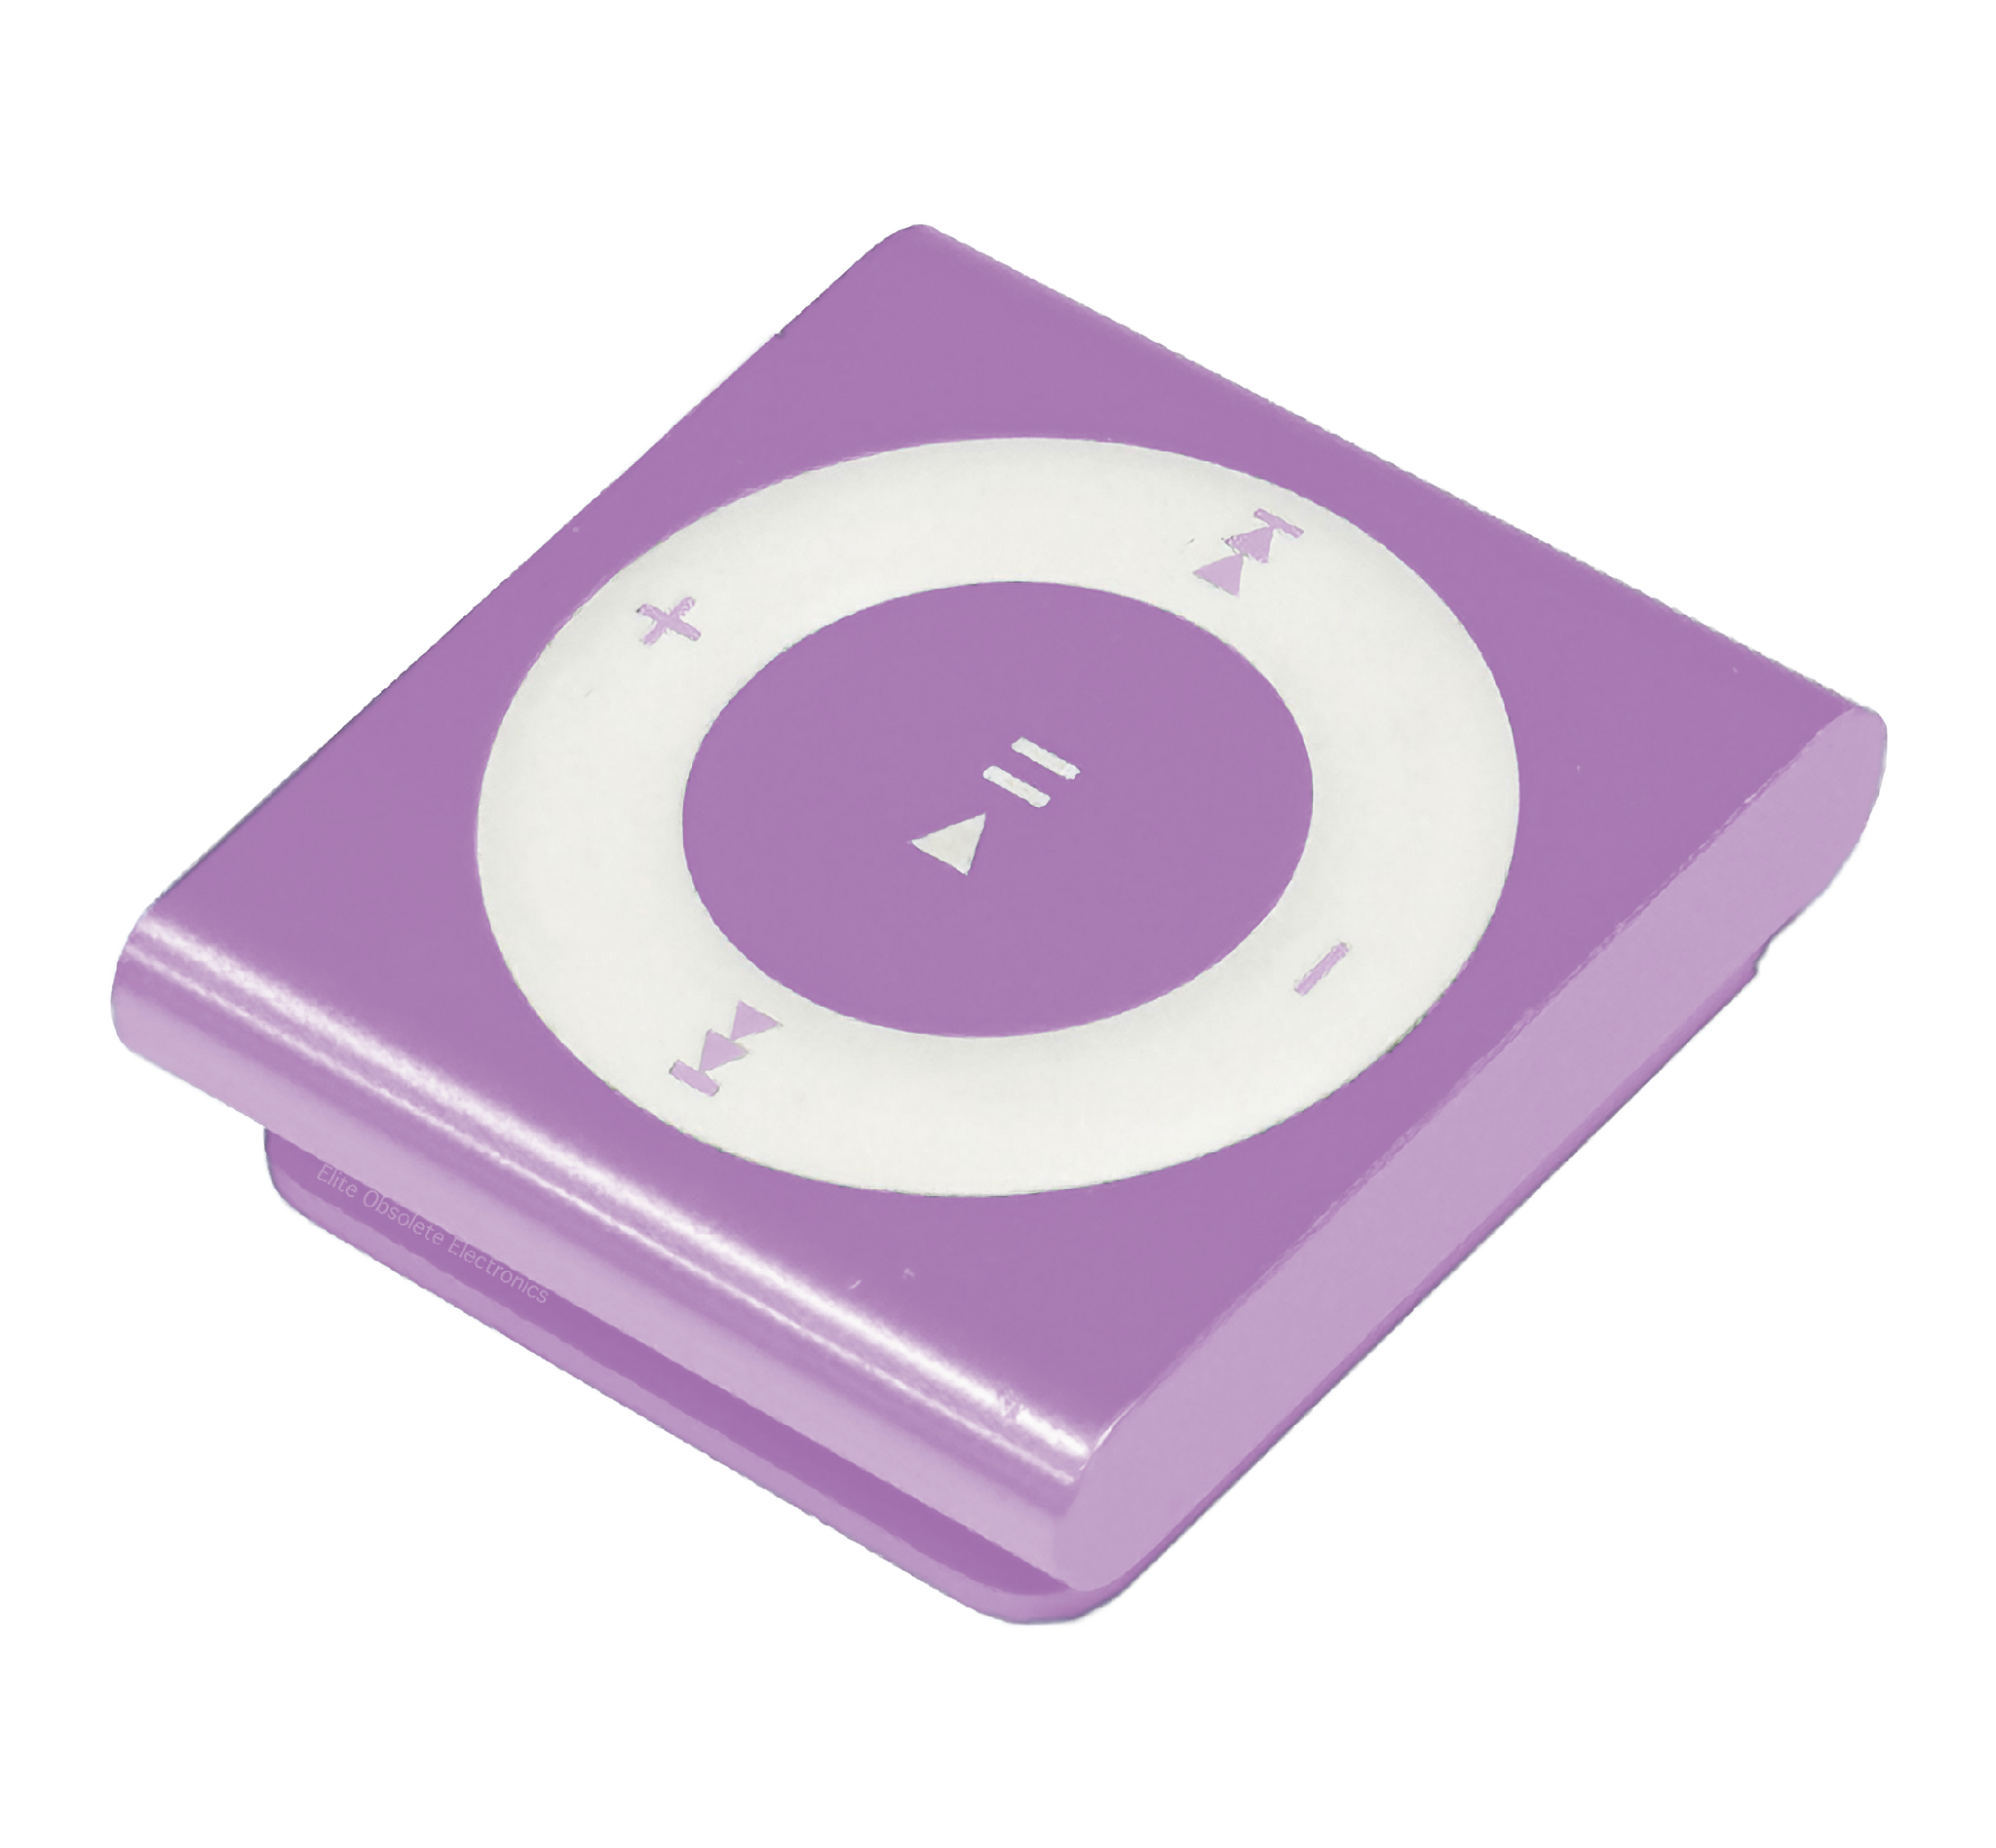 Used Apple iPod Shuffle 4th Generation 2GB Lavender Purple A1373 MD777LL/A